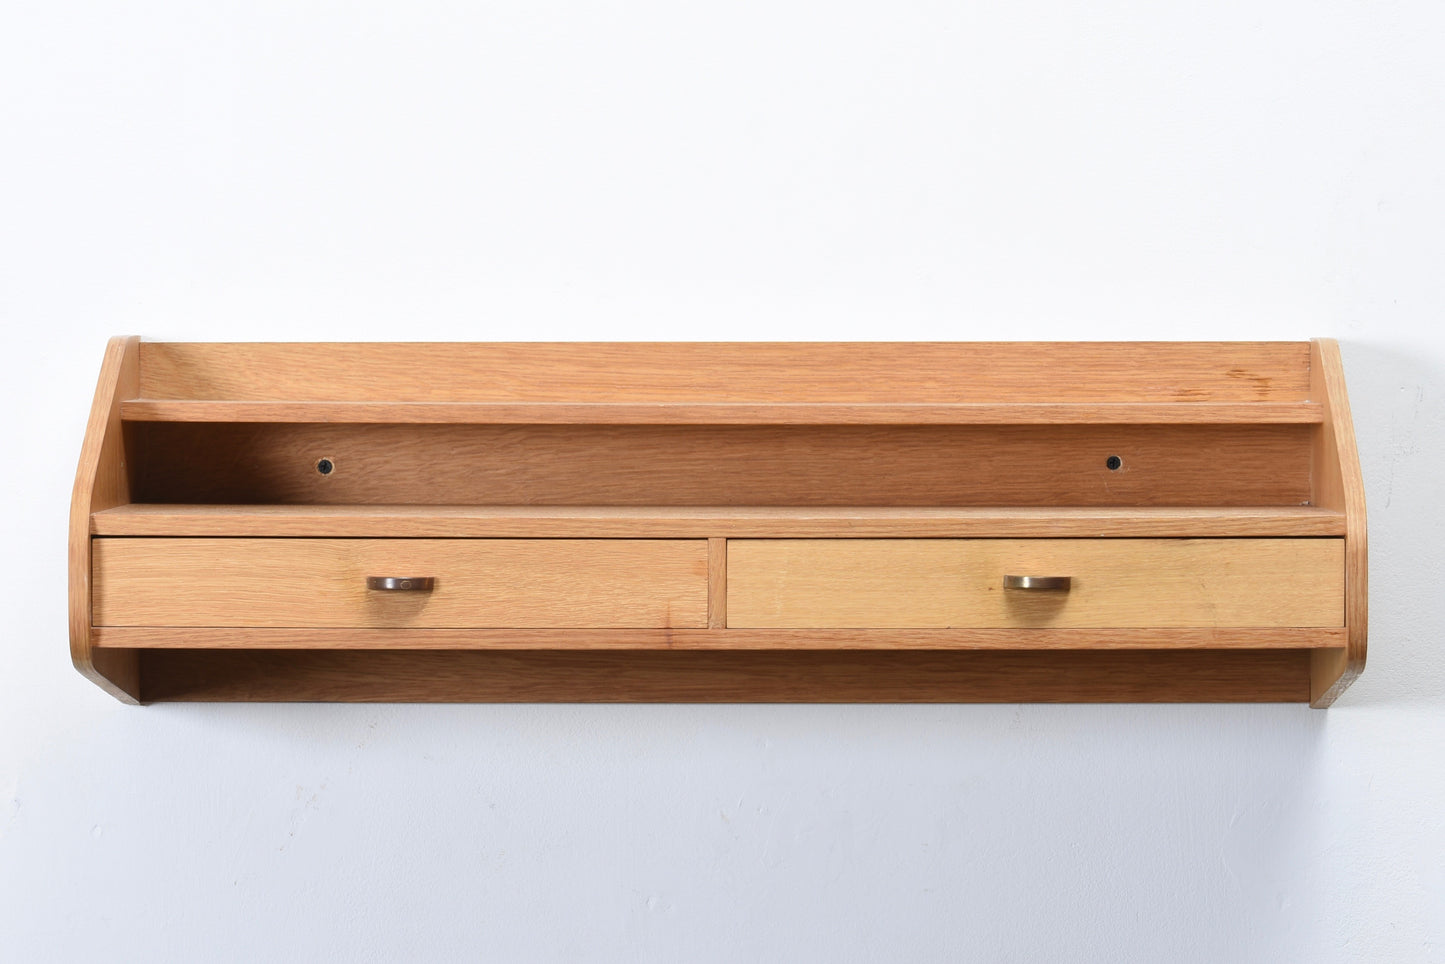 Vintage floating shelf with drawers in oak